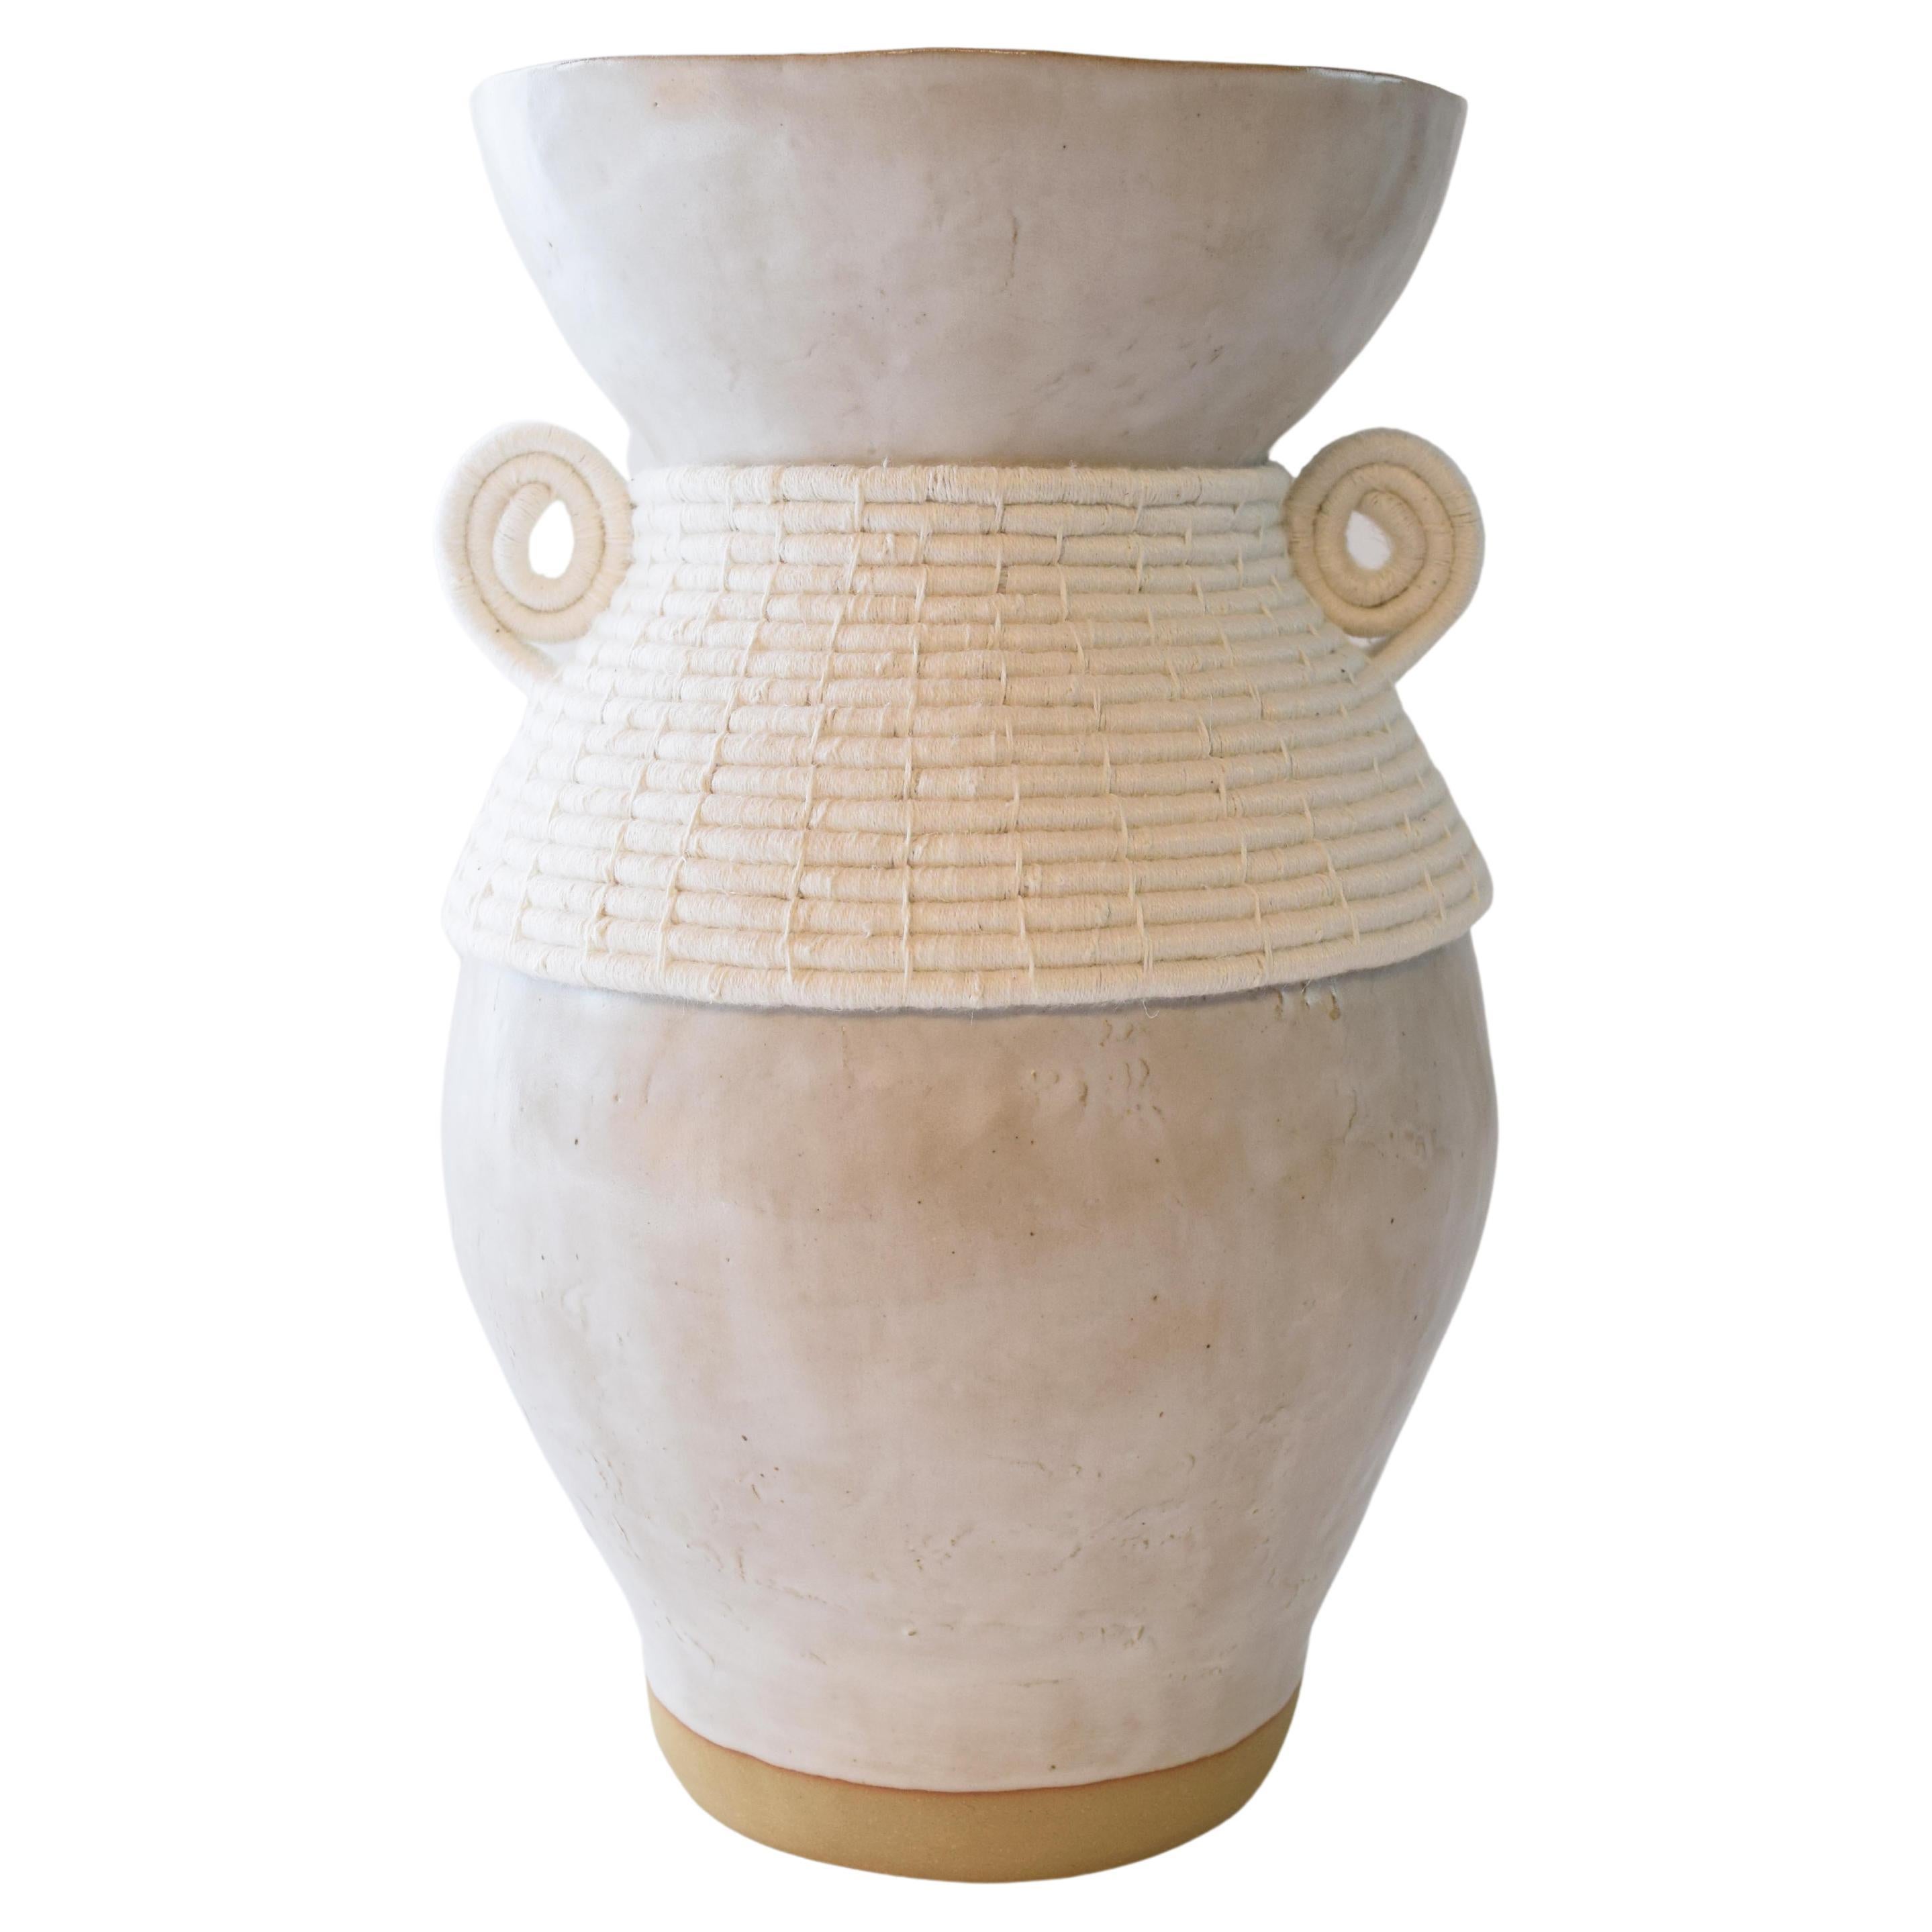 One of a Kind Ceramic Vase #766, Satin White Glaze & Woven Cotton Detail